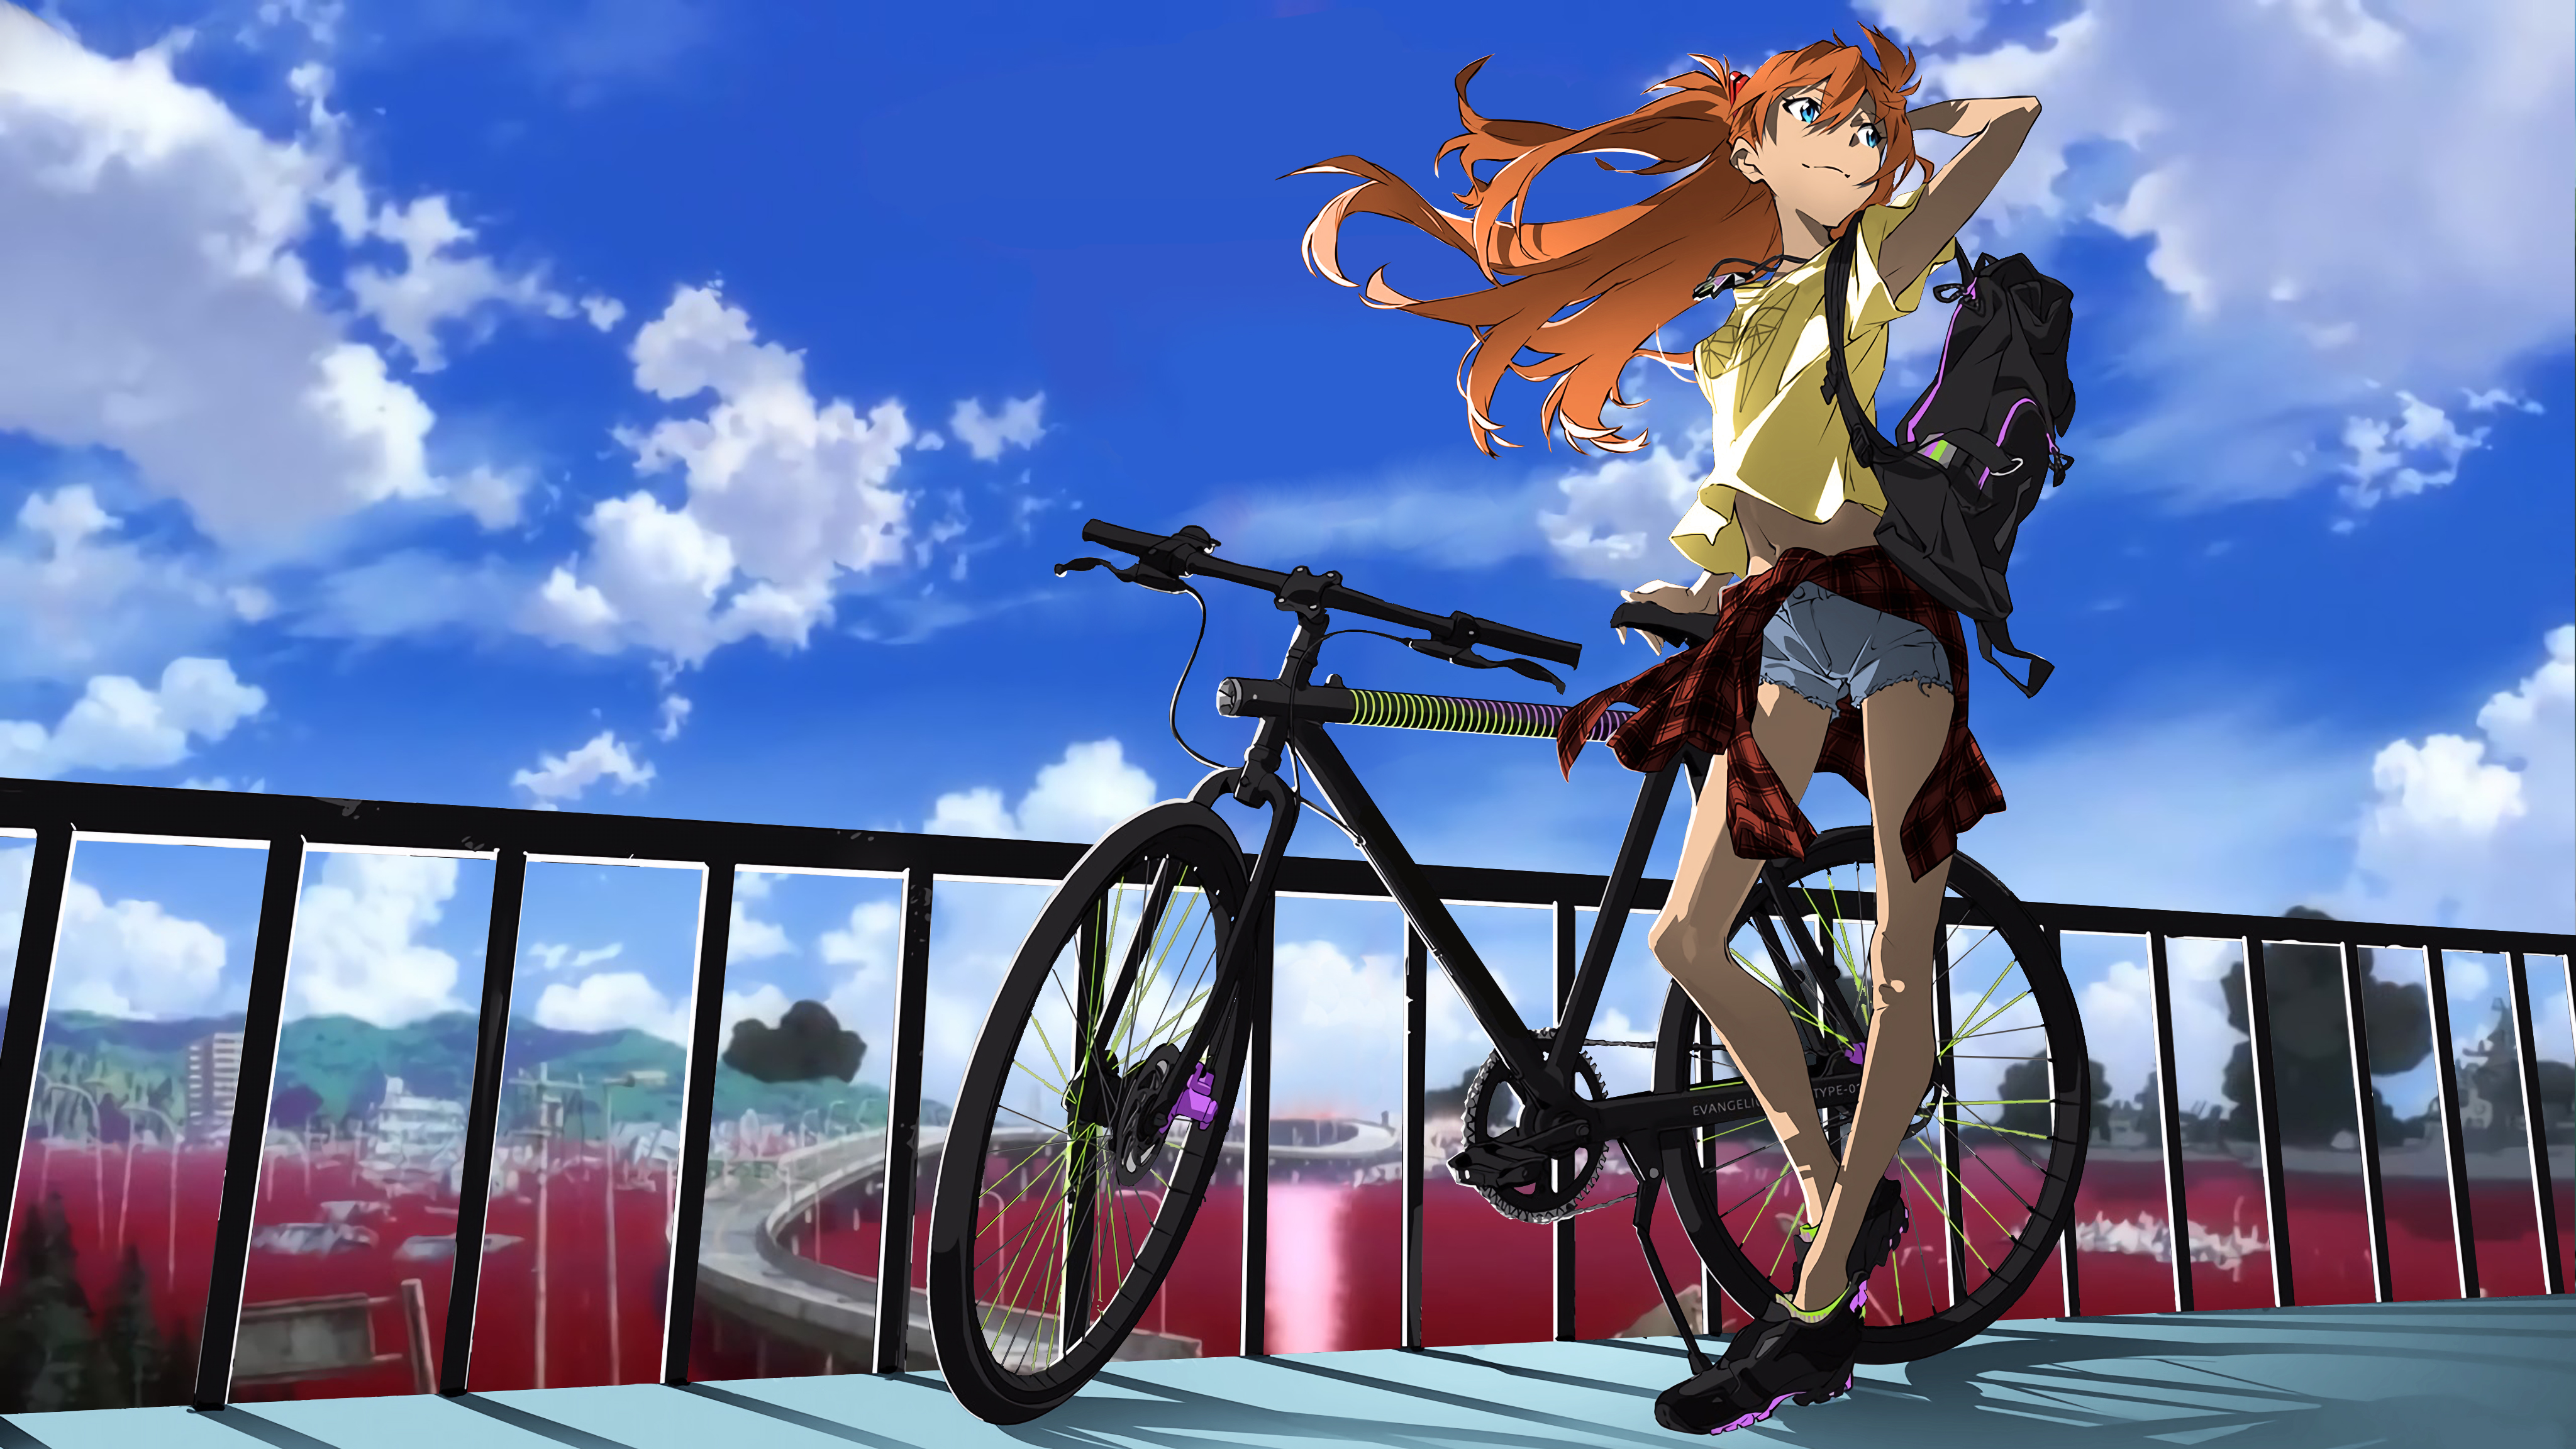 Anime 4096x2304 Asuka Langley Soryu redhead Neon Genesis Evangelion jean shorts backpacks bicycle railing long hair blue eyes sky Streetwear